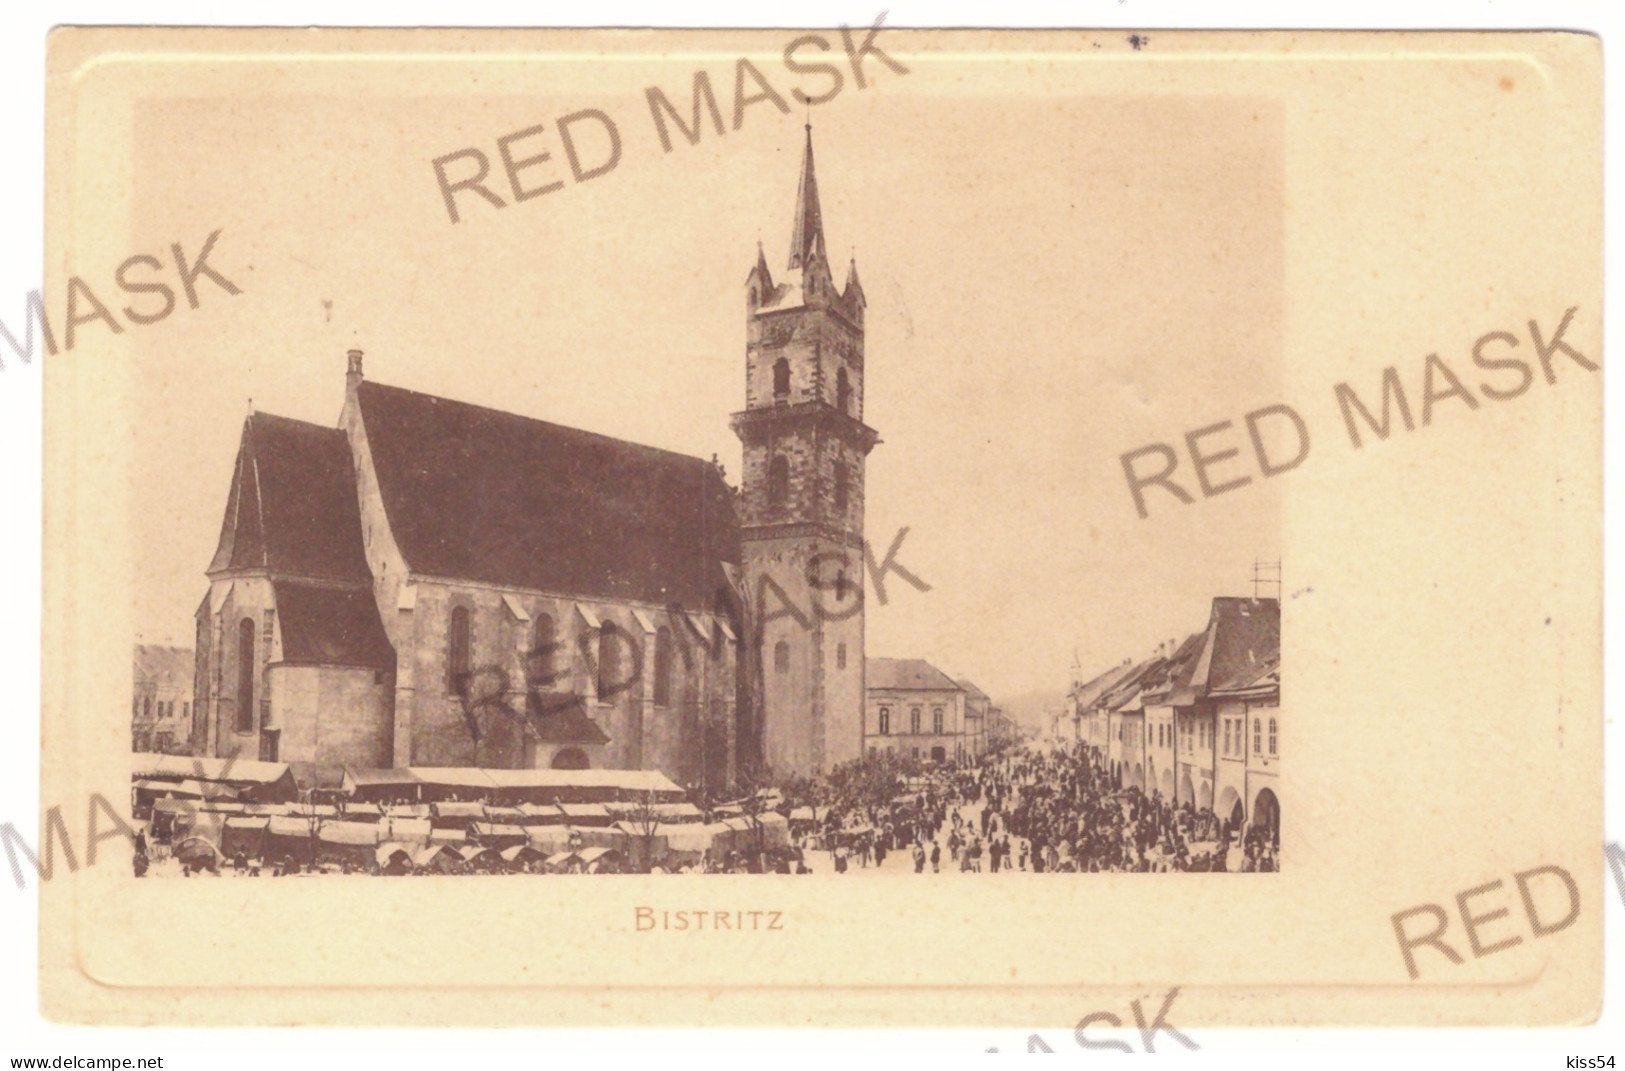 RO 45 - 20675 BISTRITA, Big Market & Church, Romania - Old Postcard - Used - 1906 - Romania